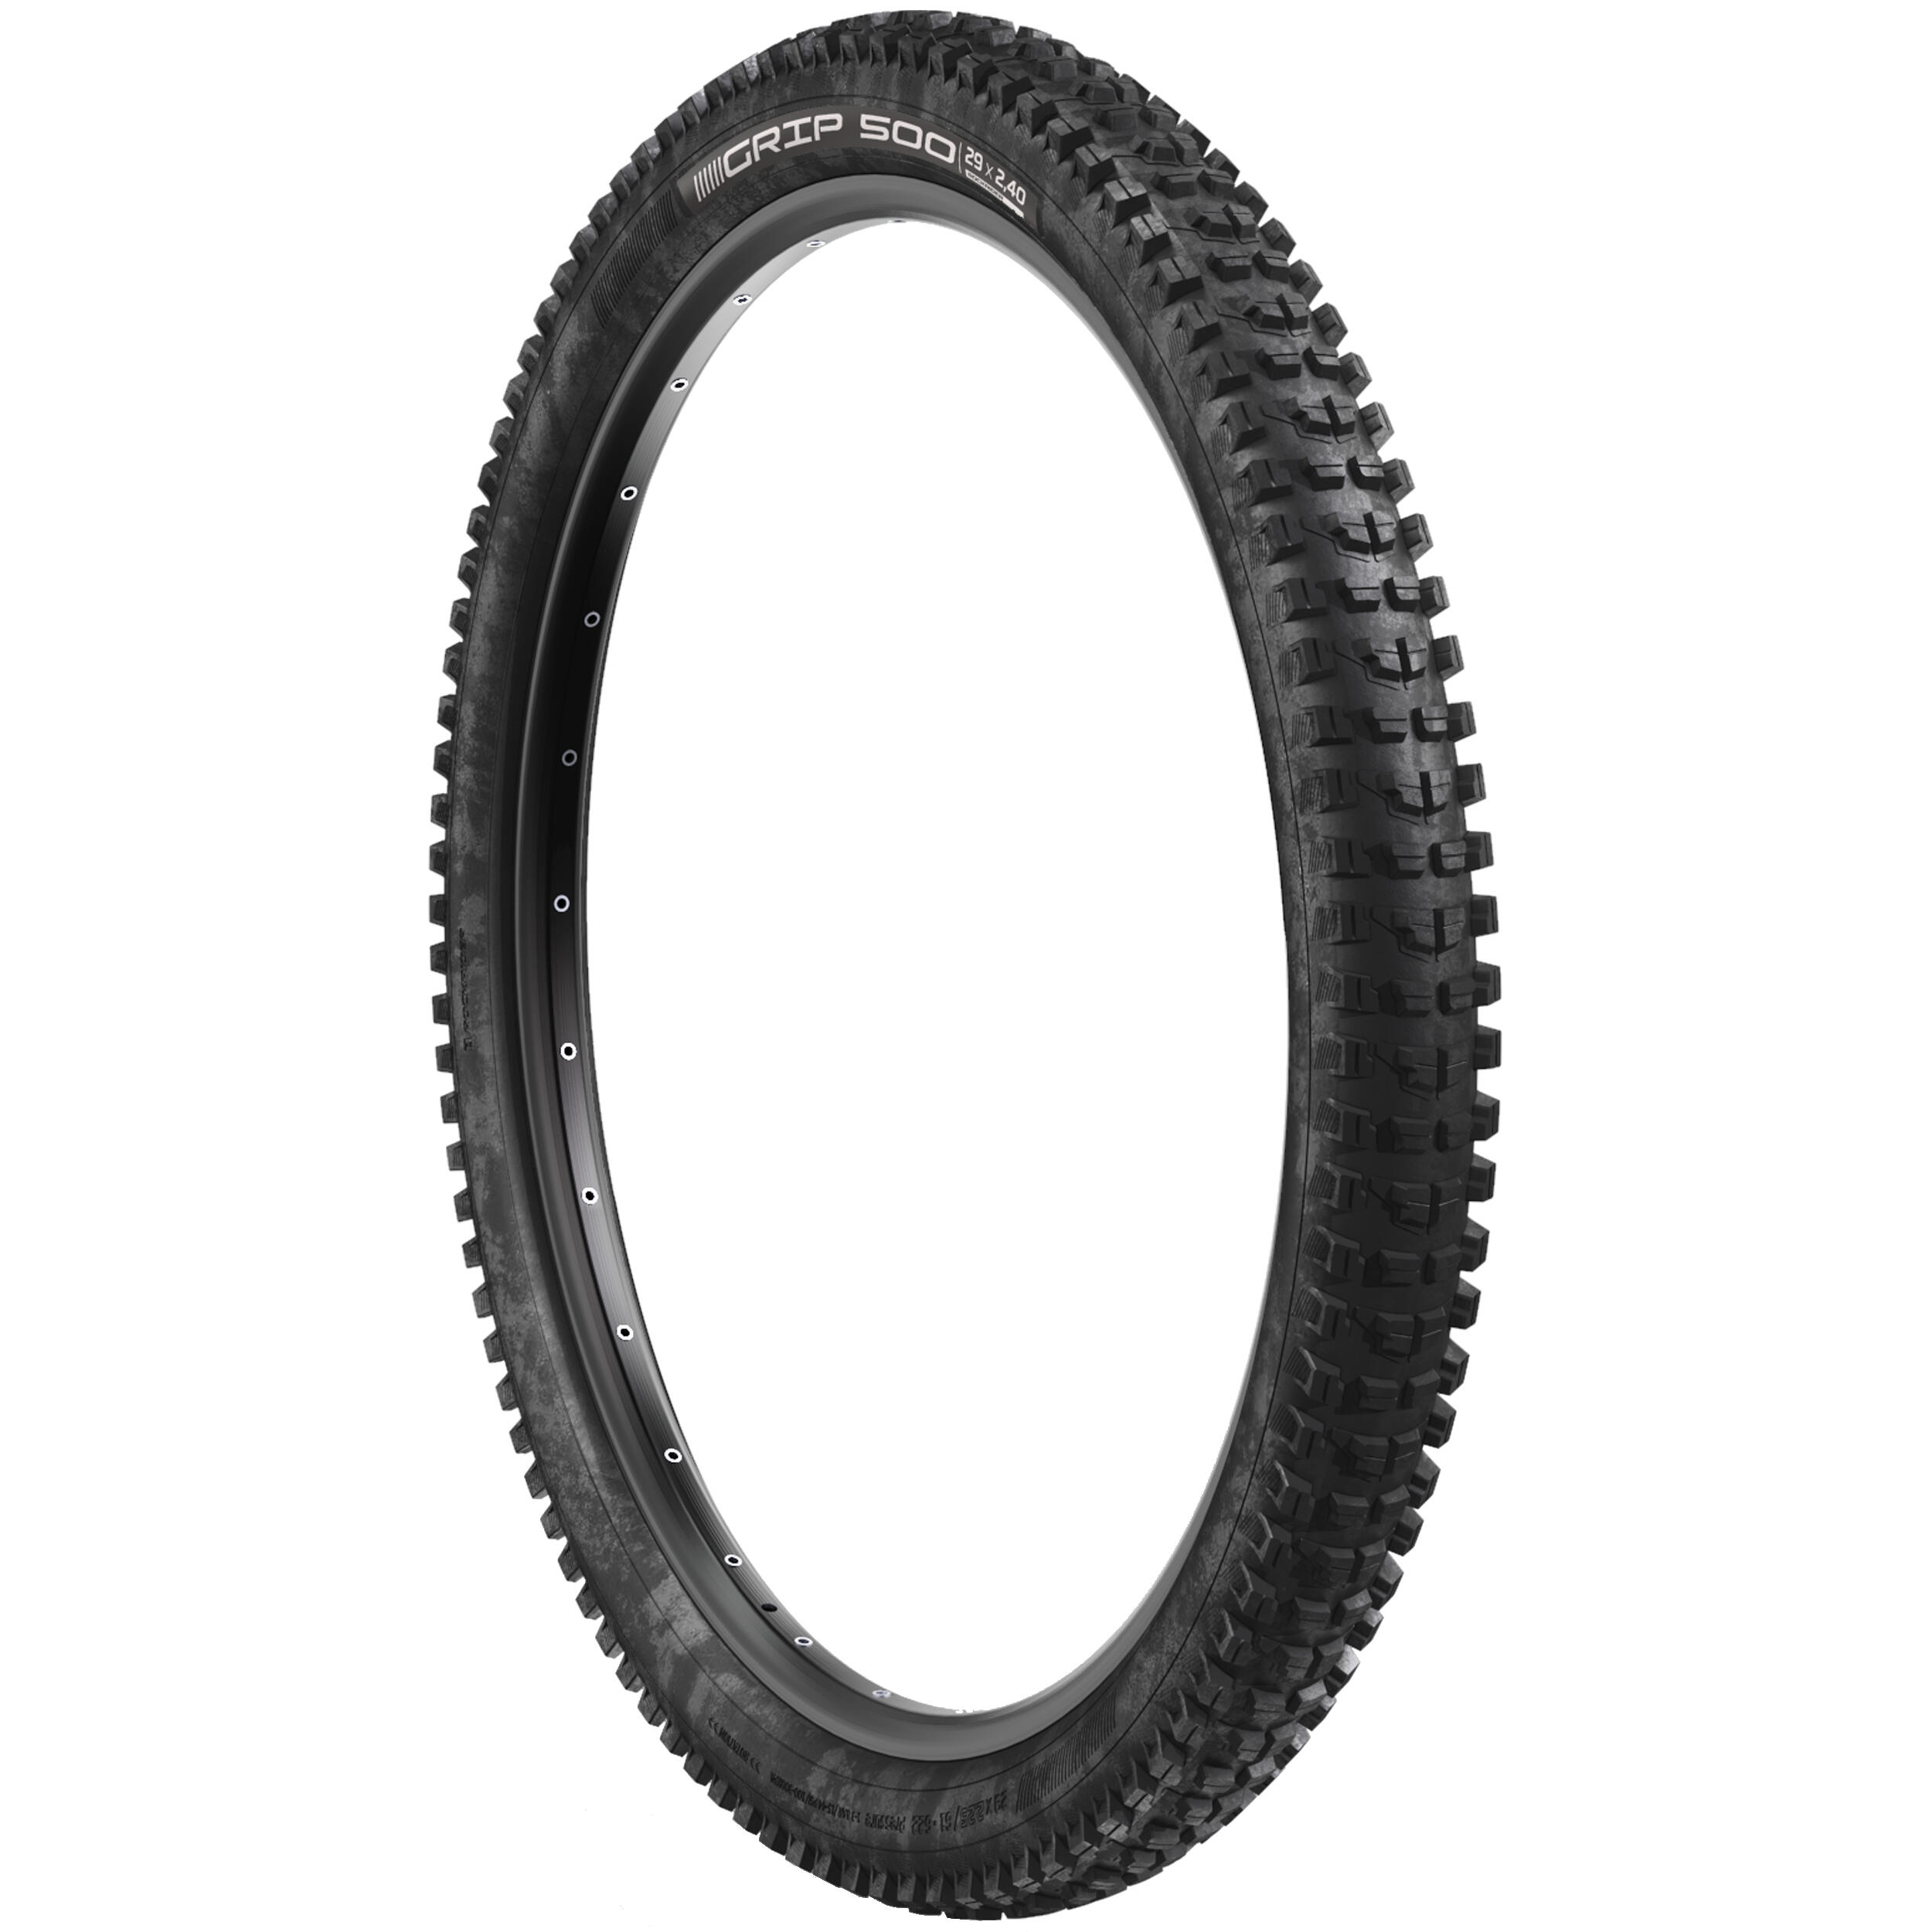 29" x 2.4 Mountain Bike Tyre Grip 500 2/6